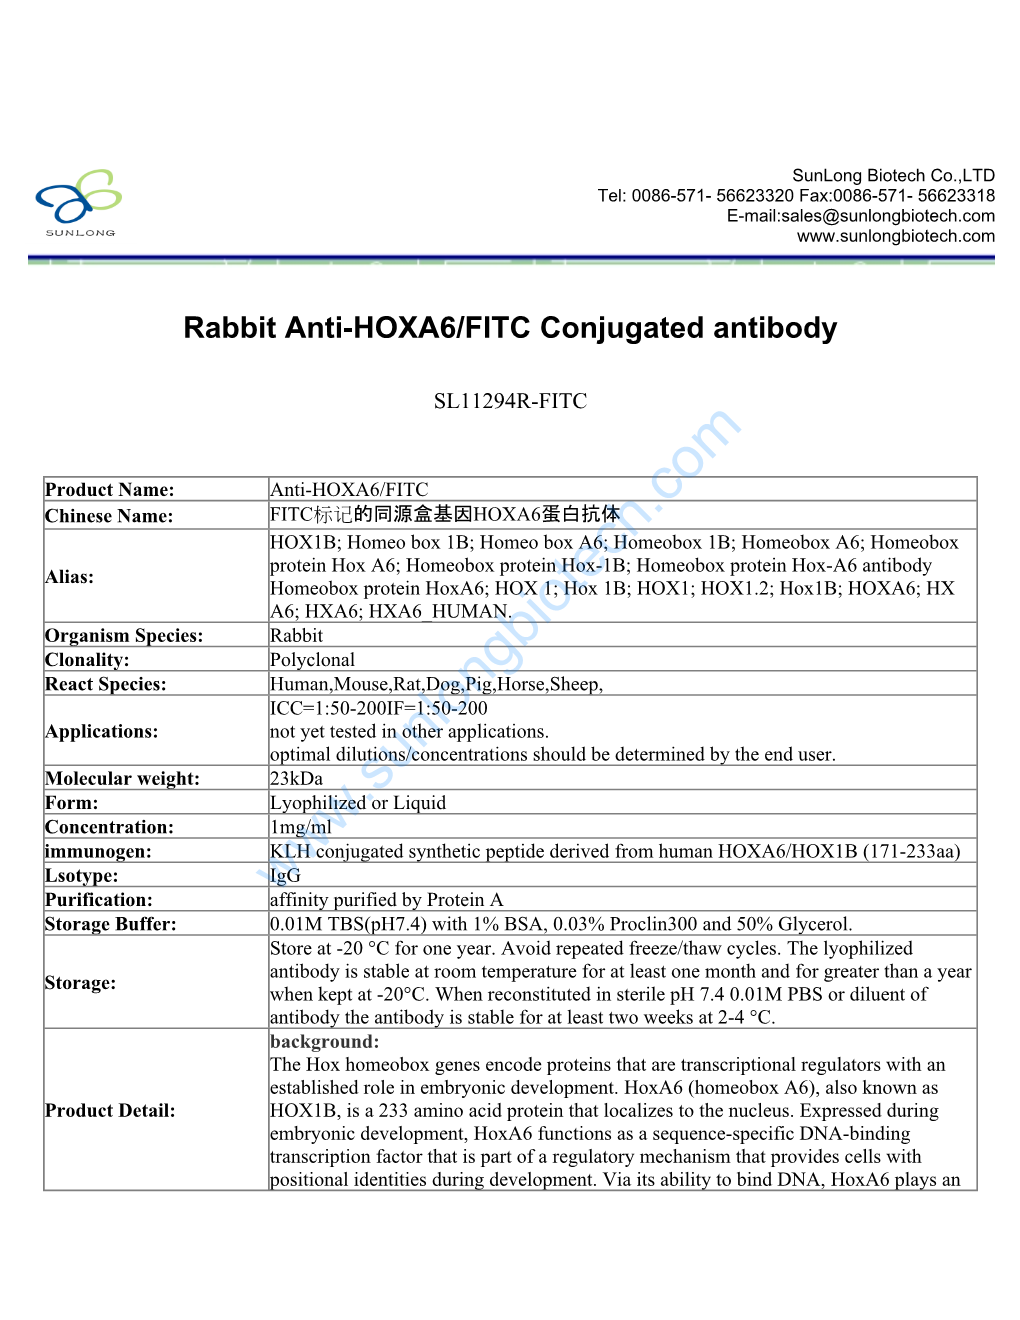 Rabbit Anti-HOXA6/FITC Conjugated Antibody